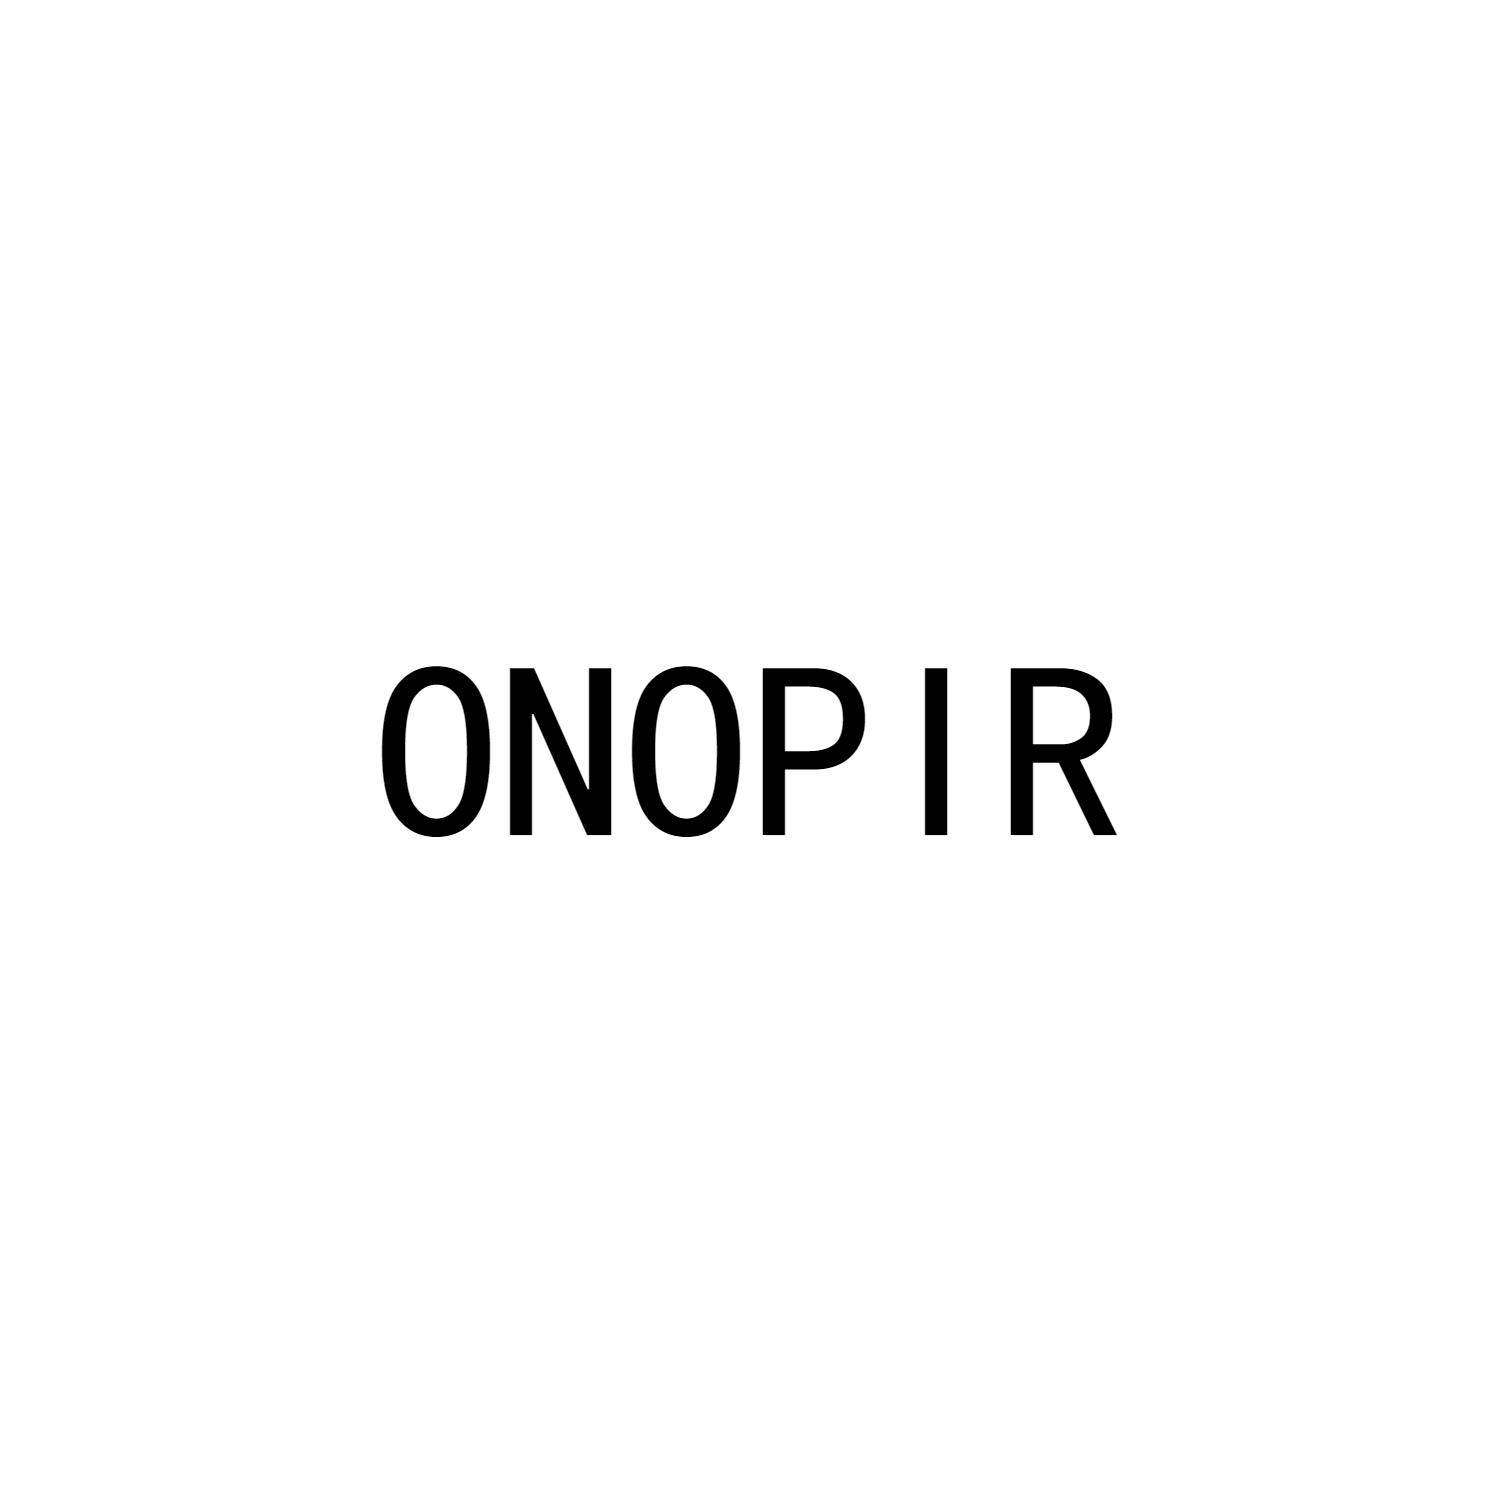 ONOPIR